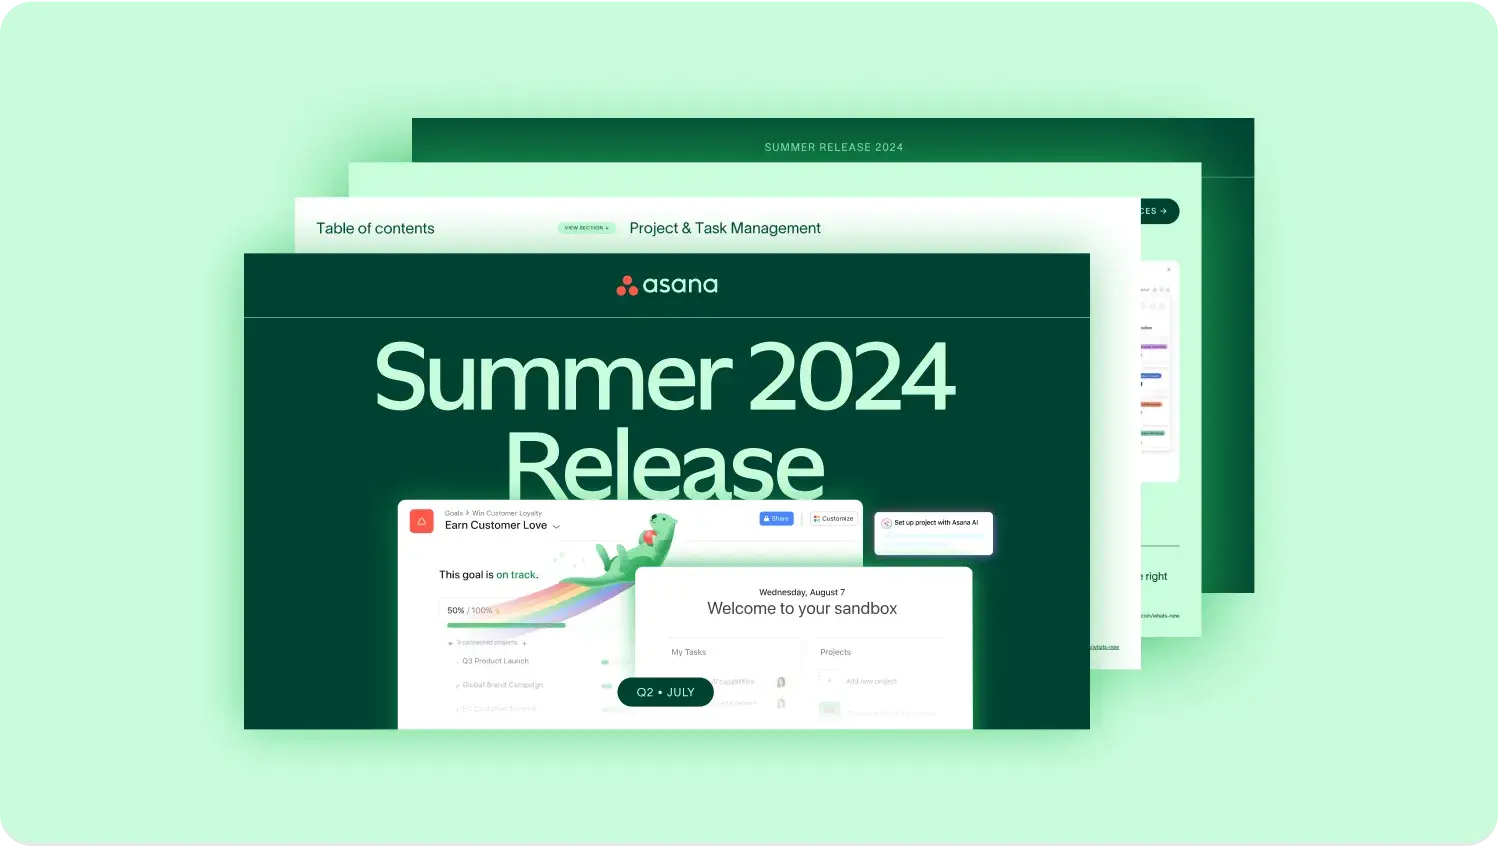 Summer 2024 Release Marketing Kit